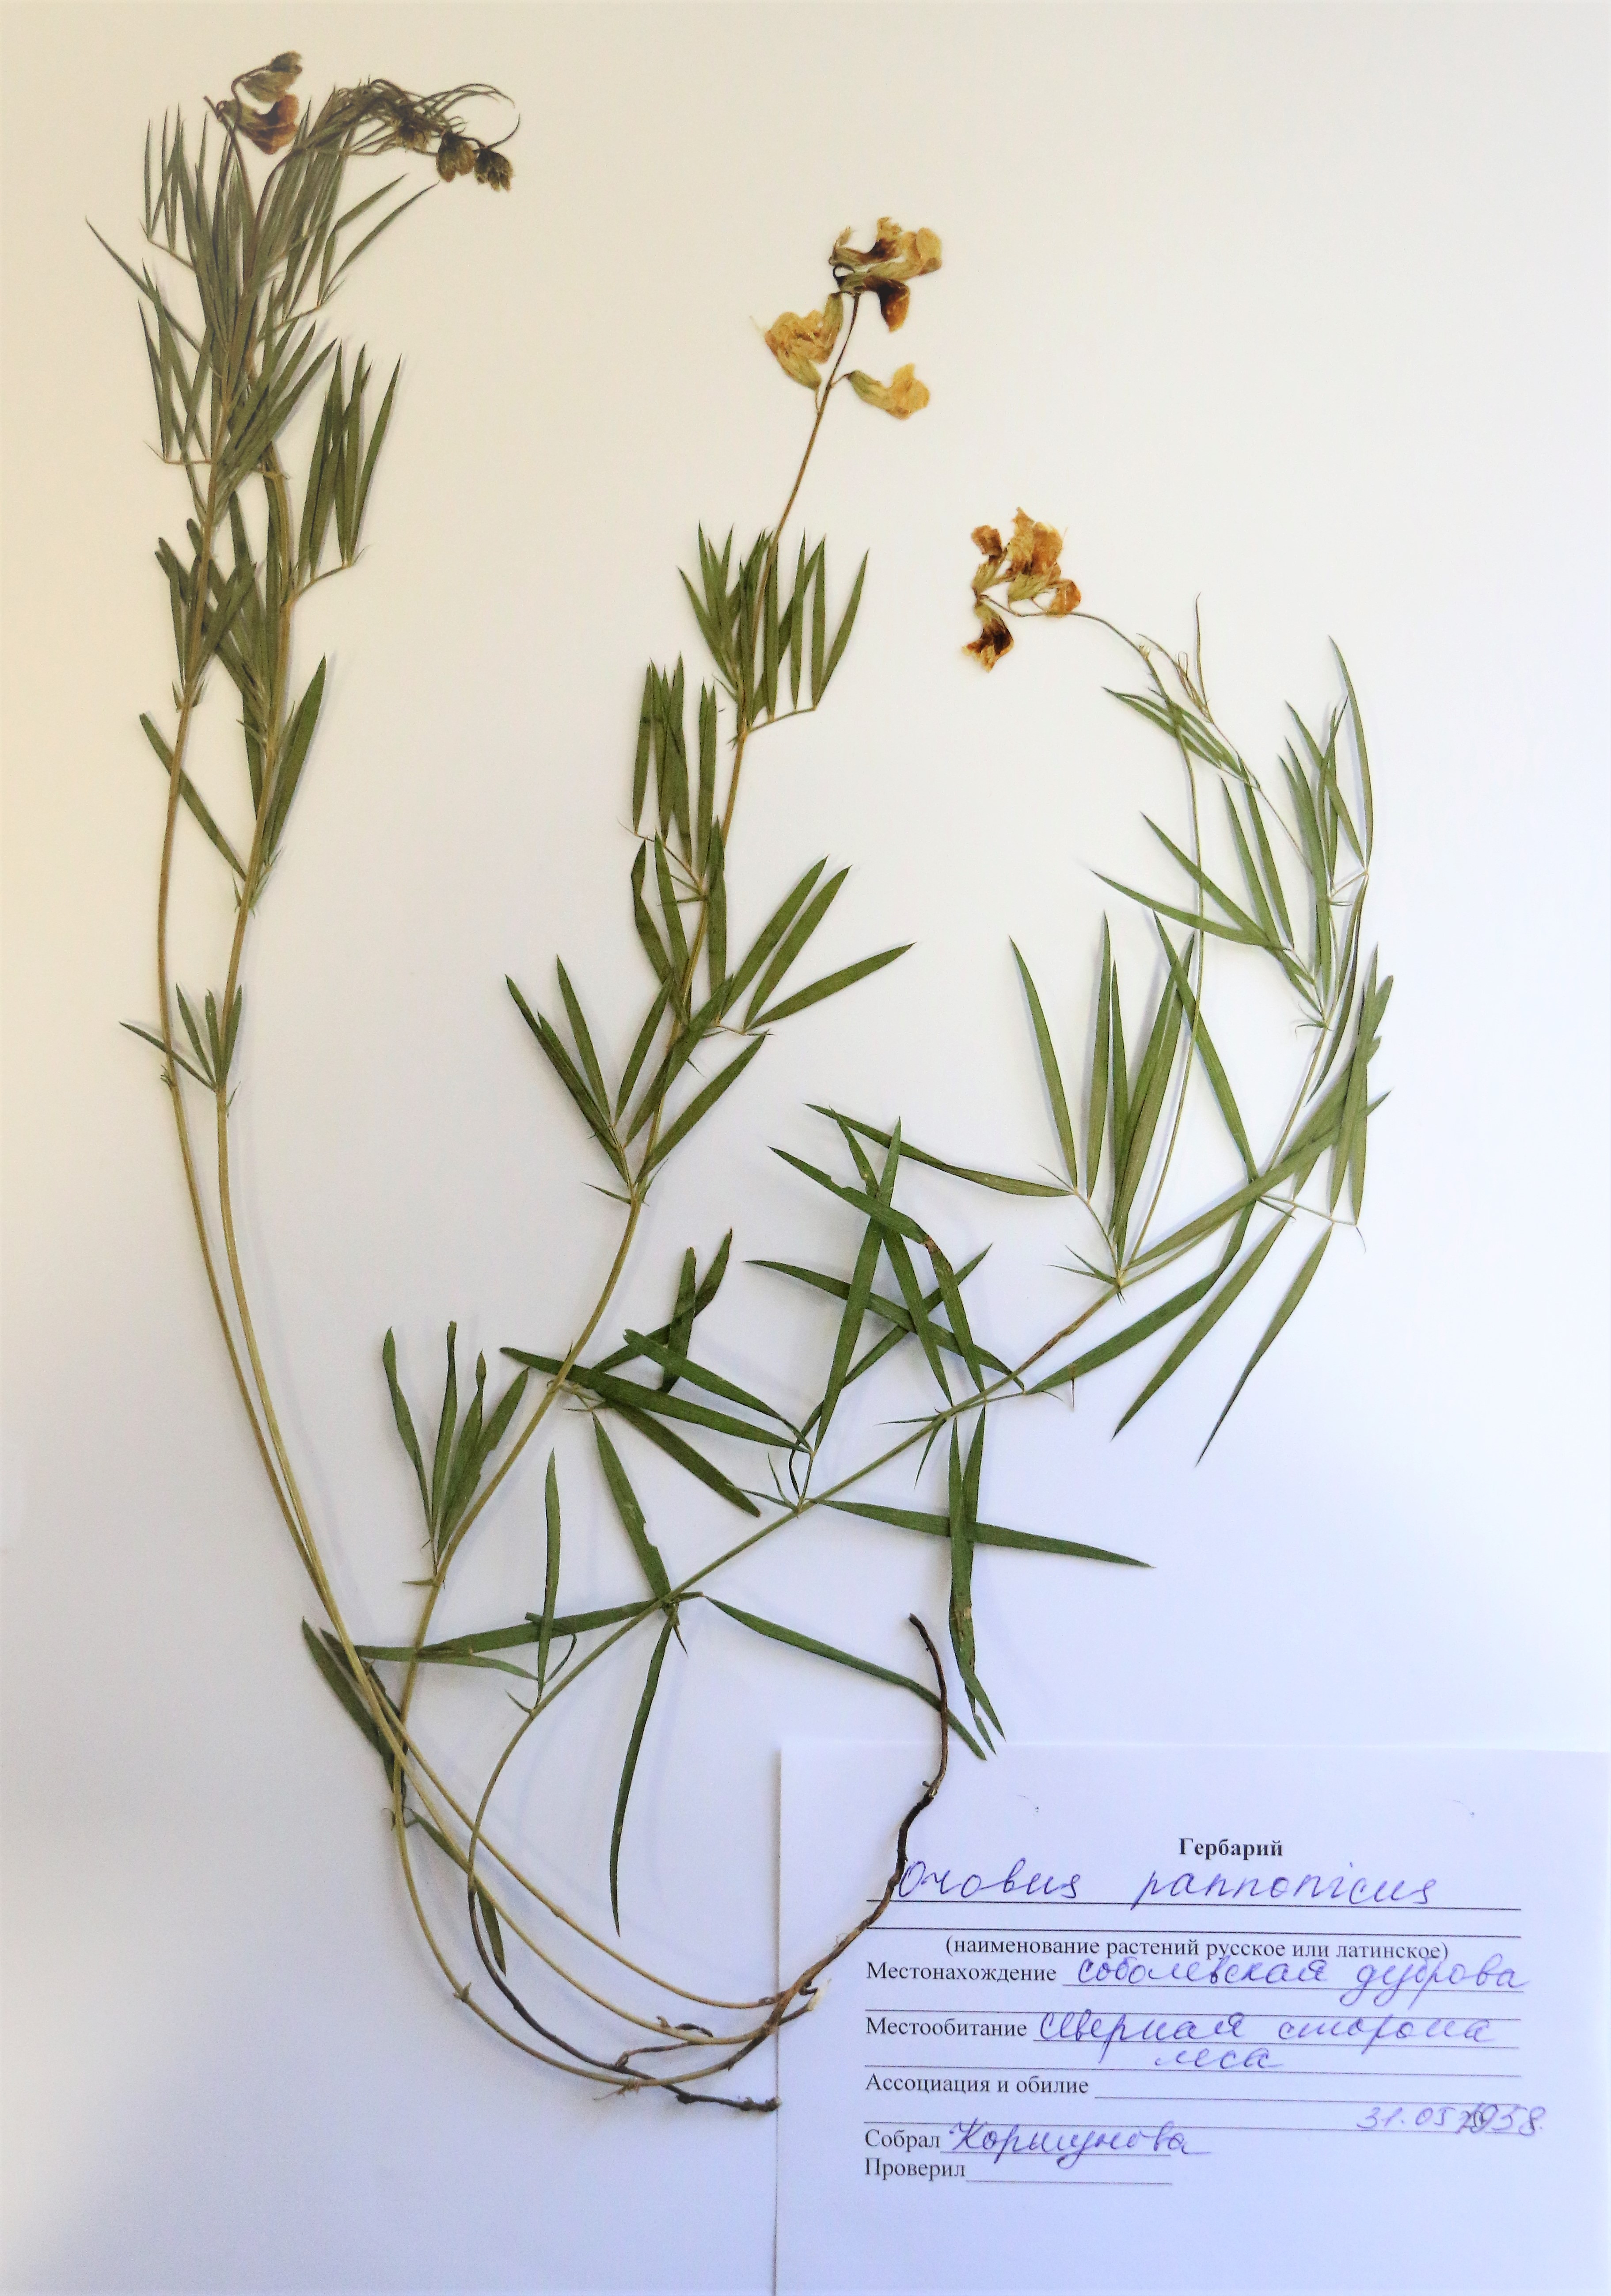 Lathyrus pannonicus  (Jacq.) Garcke - Чина венгерская - Венгер әйкені 